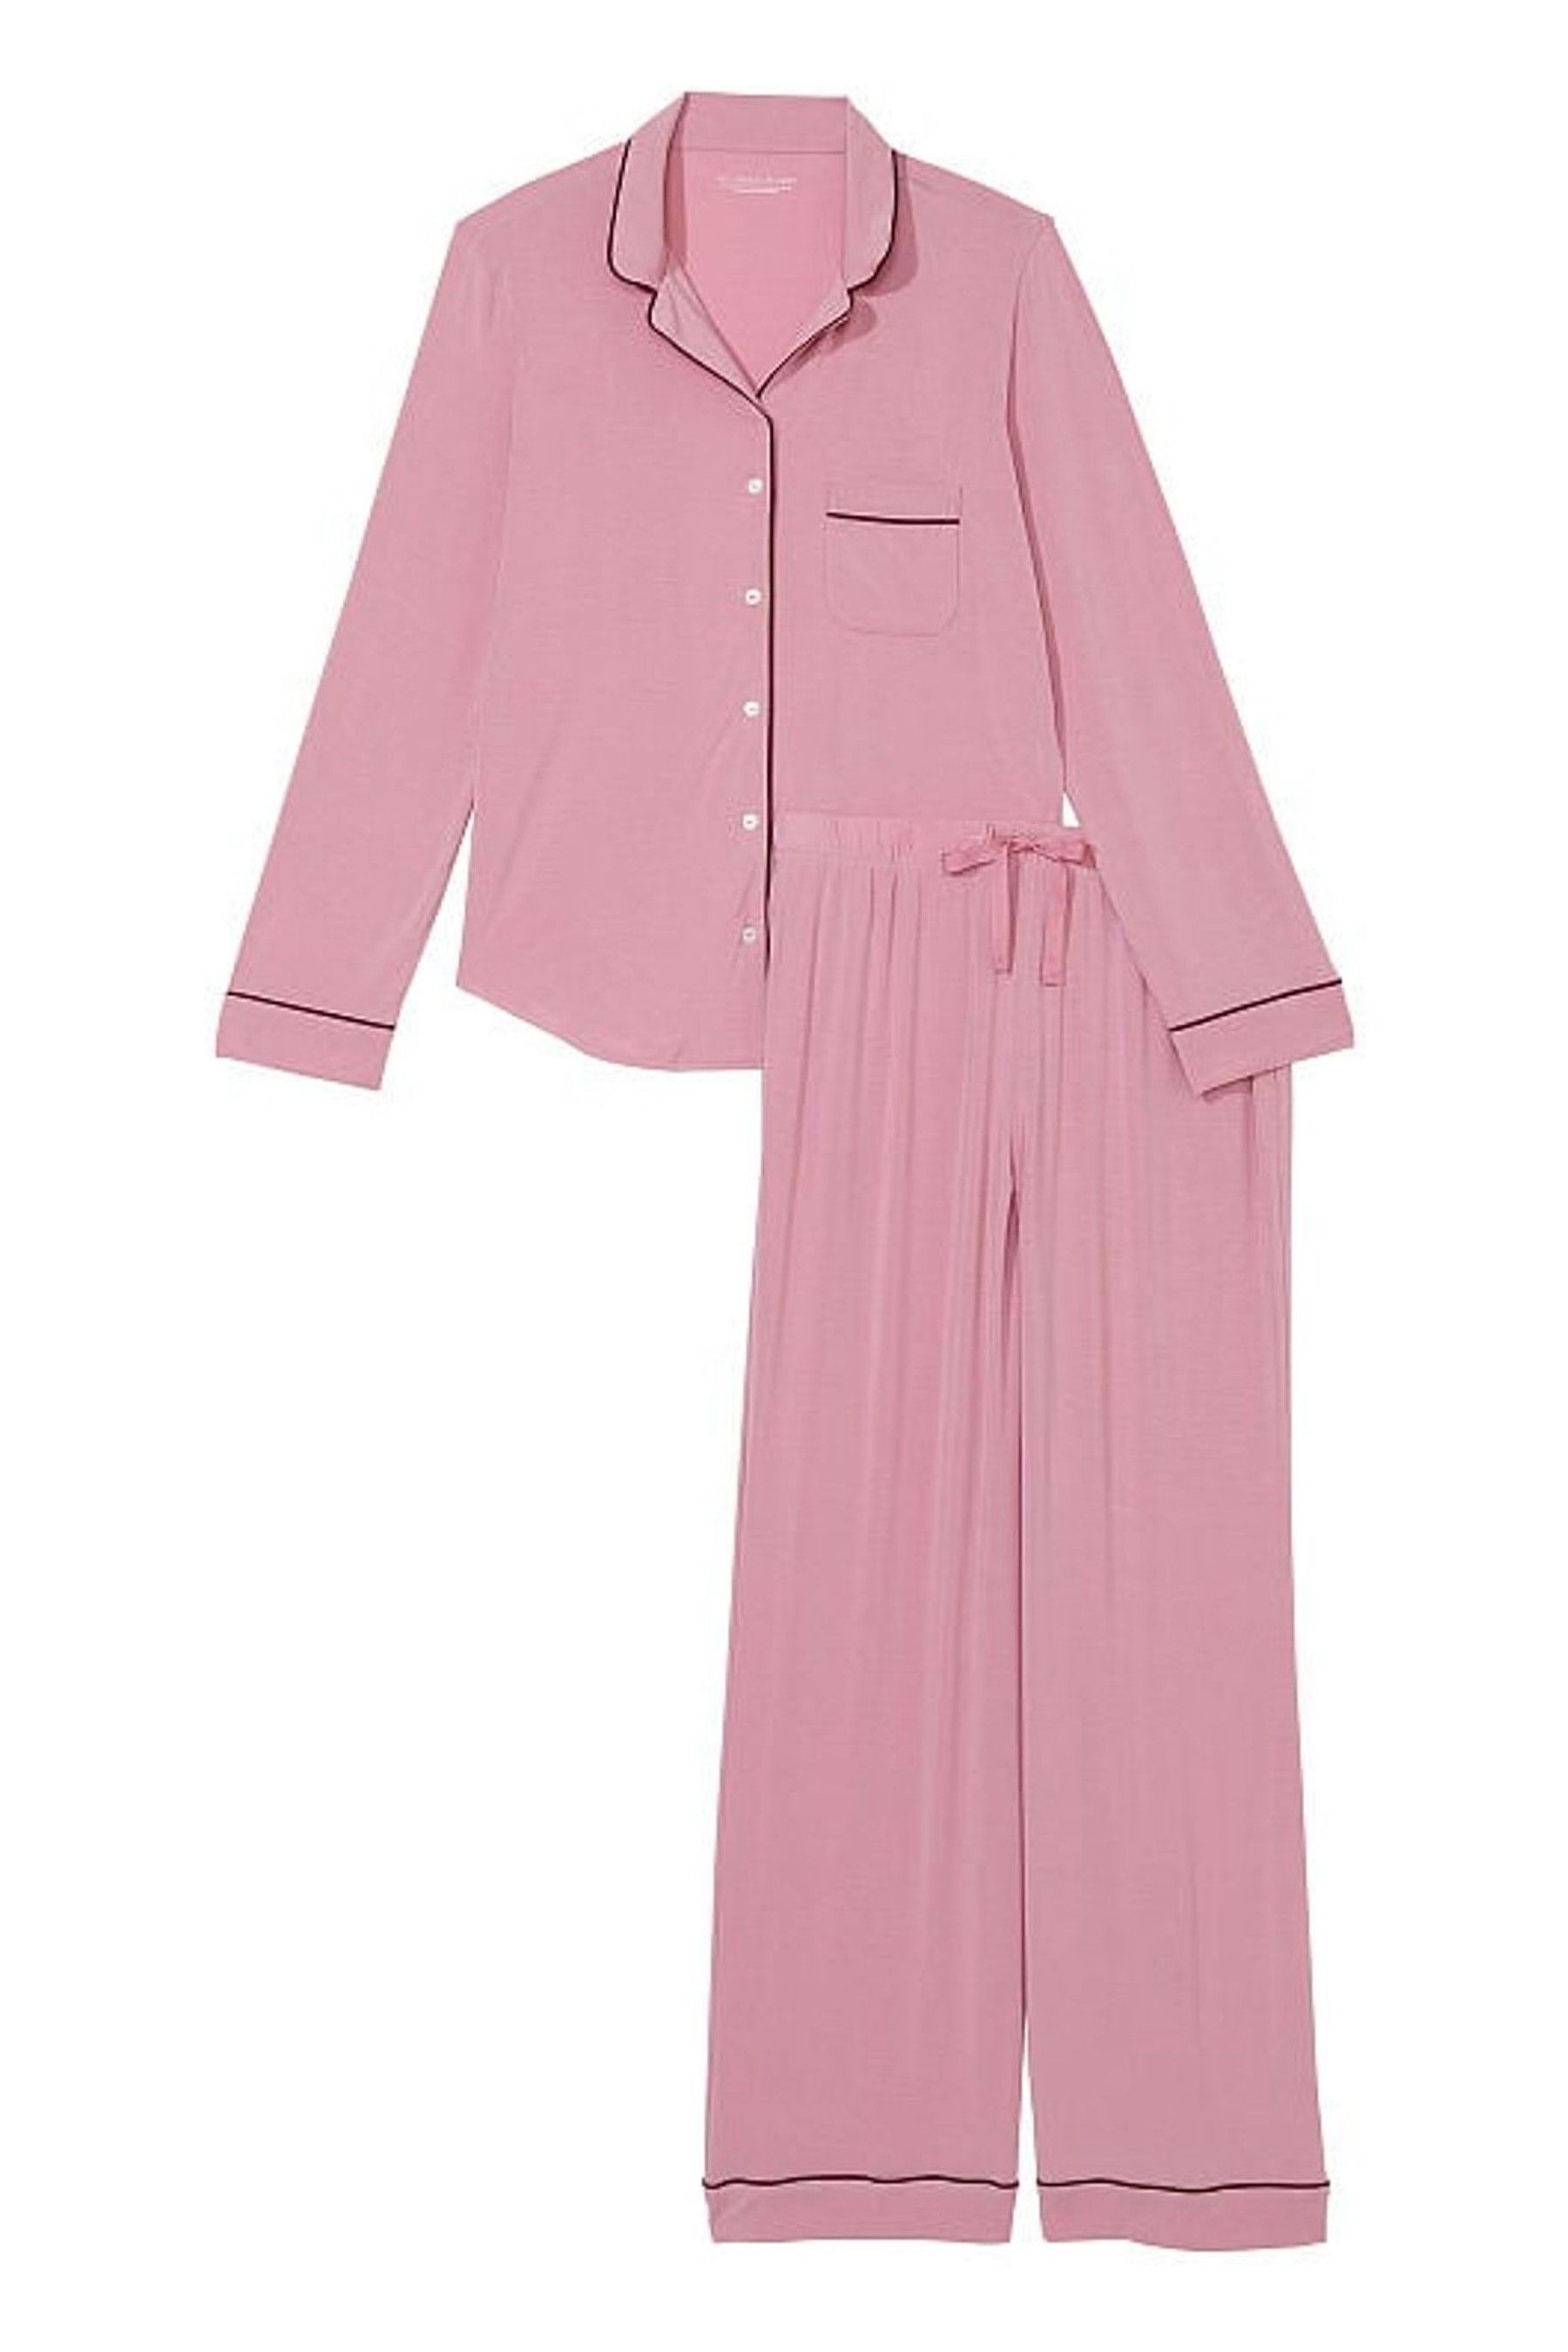 Buy Victoria's Secret Modal Long Pyjamas from the Victoria's Secret UK ...